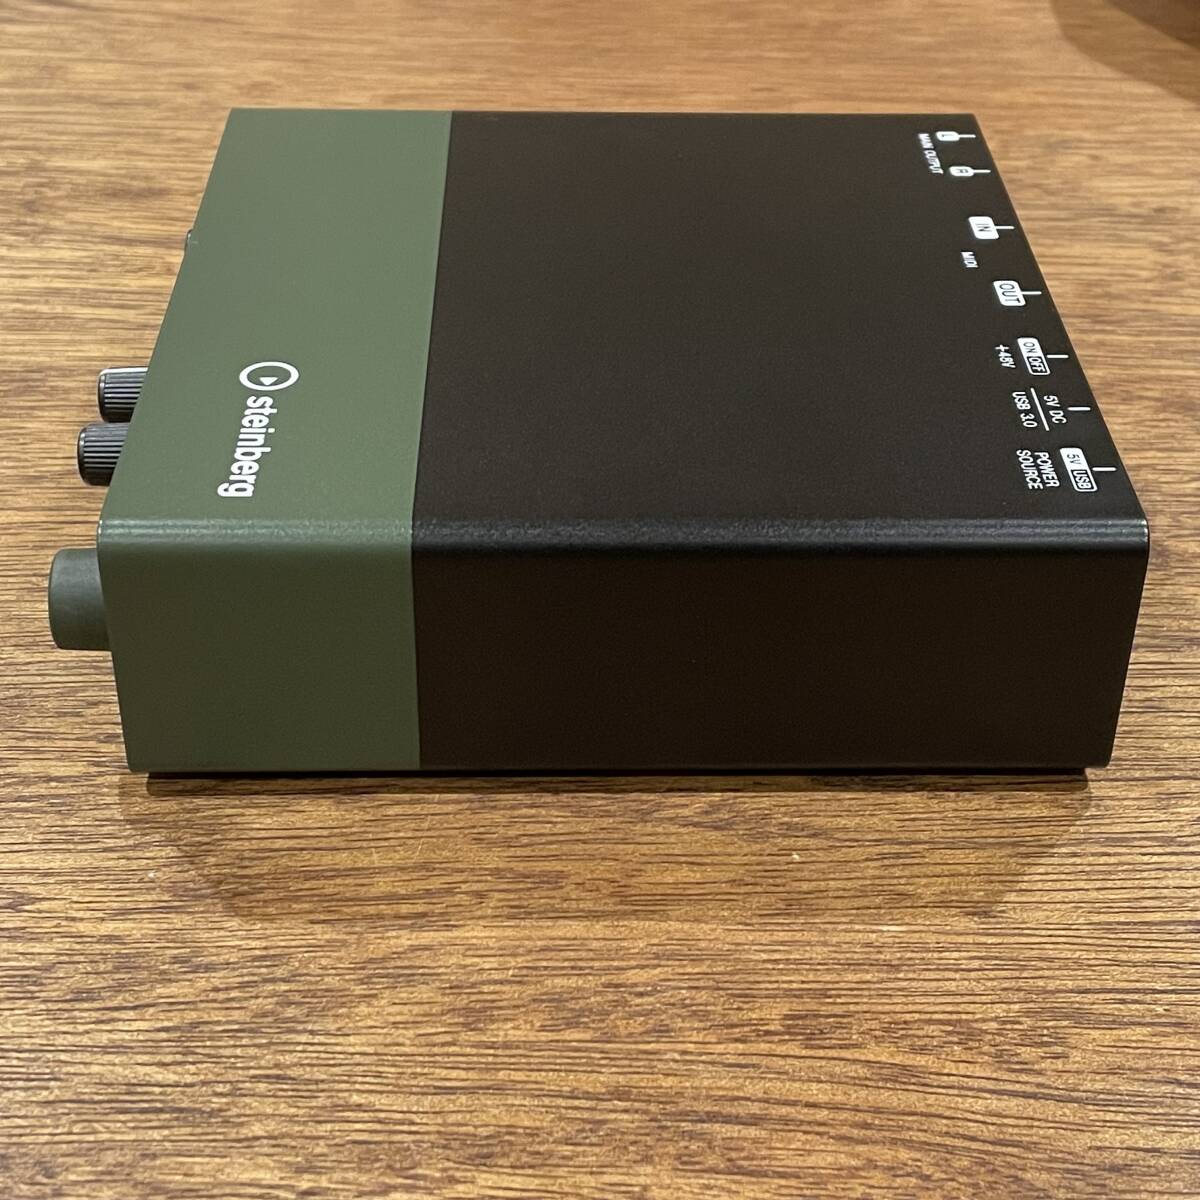 [ almost new goods ]STEINBERG ( start Inver g) / UR22C green model audio interface USB power supply adaptor attaching 